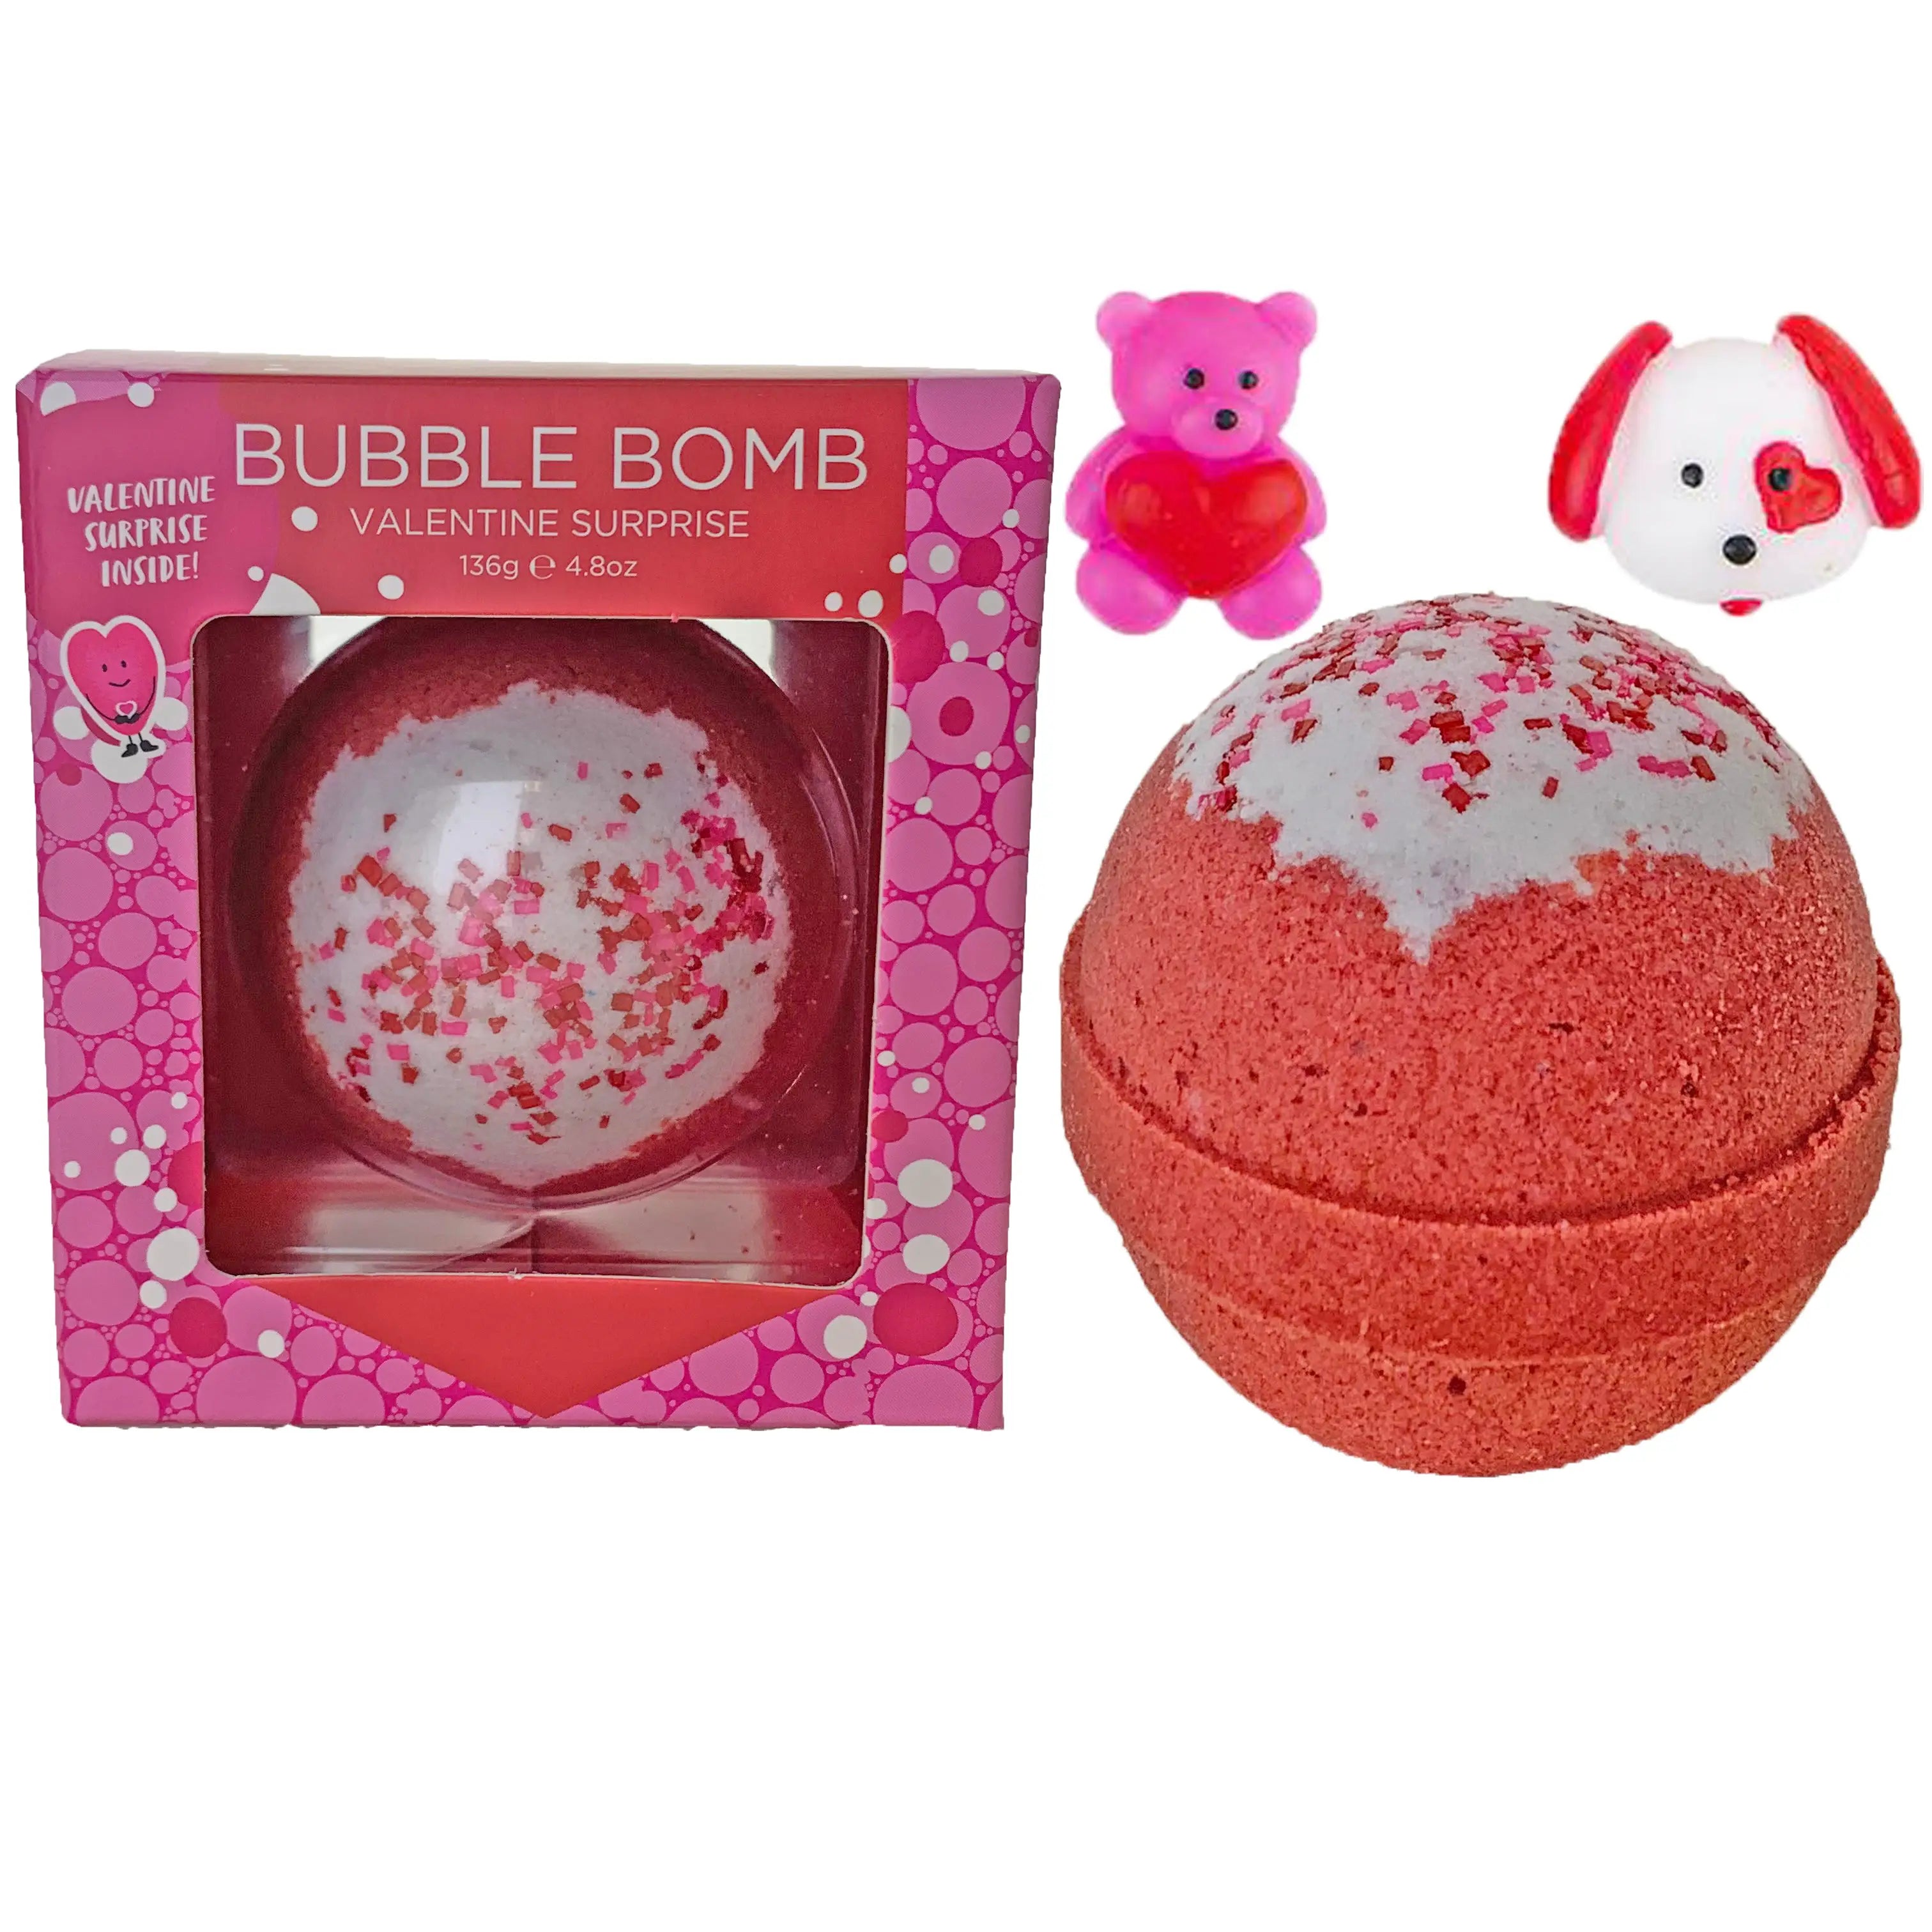 NEW Heart Surprise Bubble Bath Bomb in Gift Box